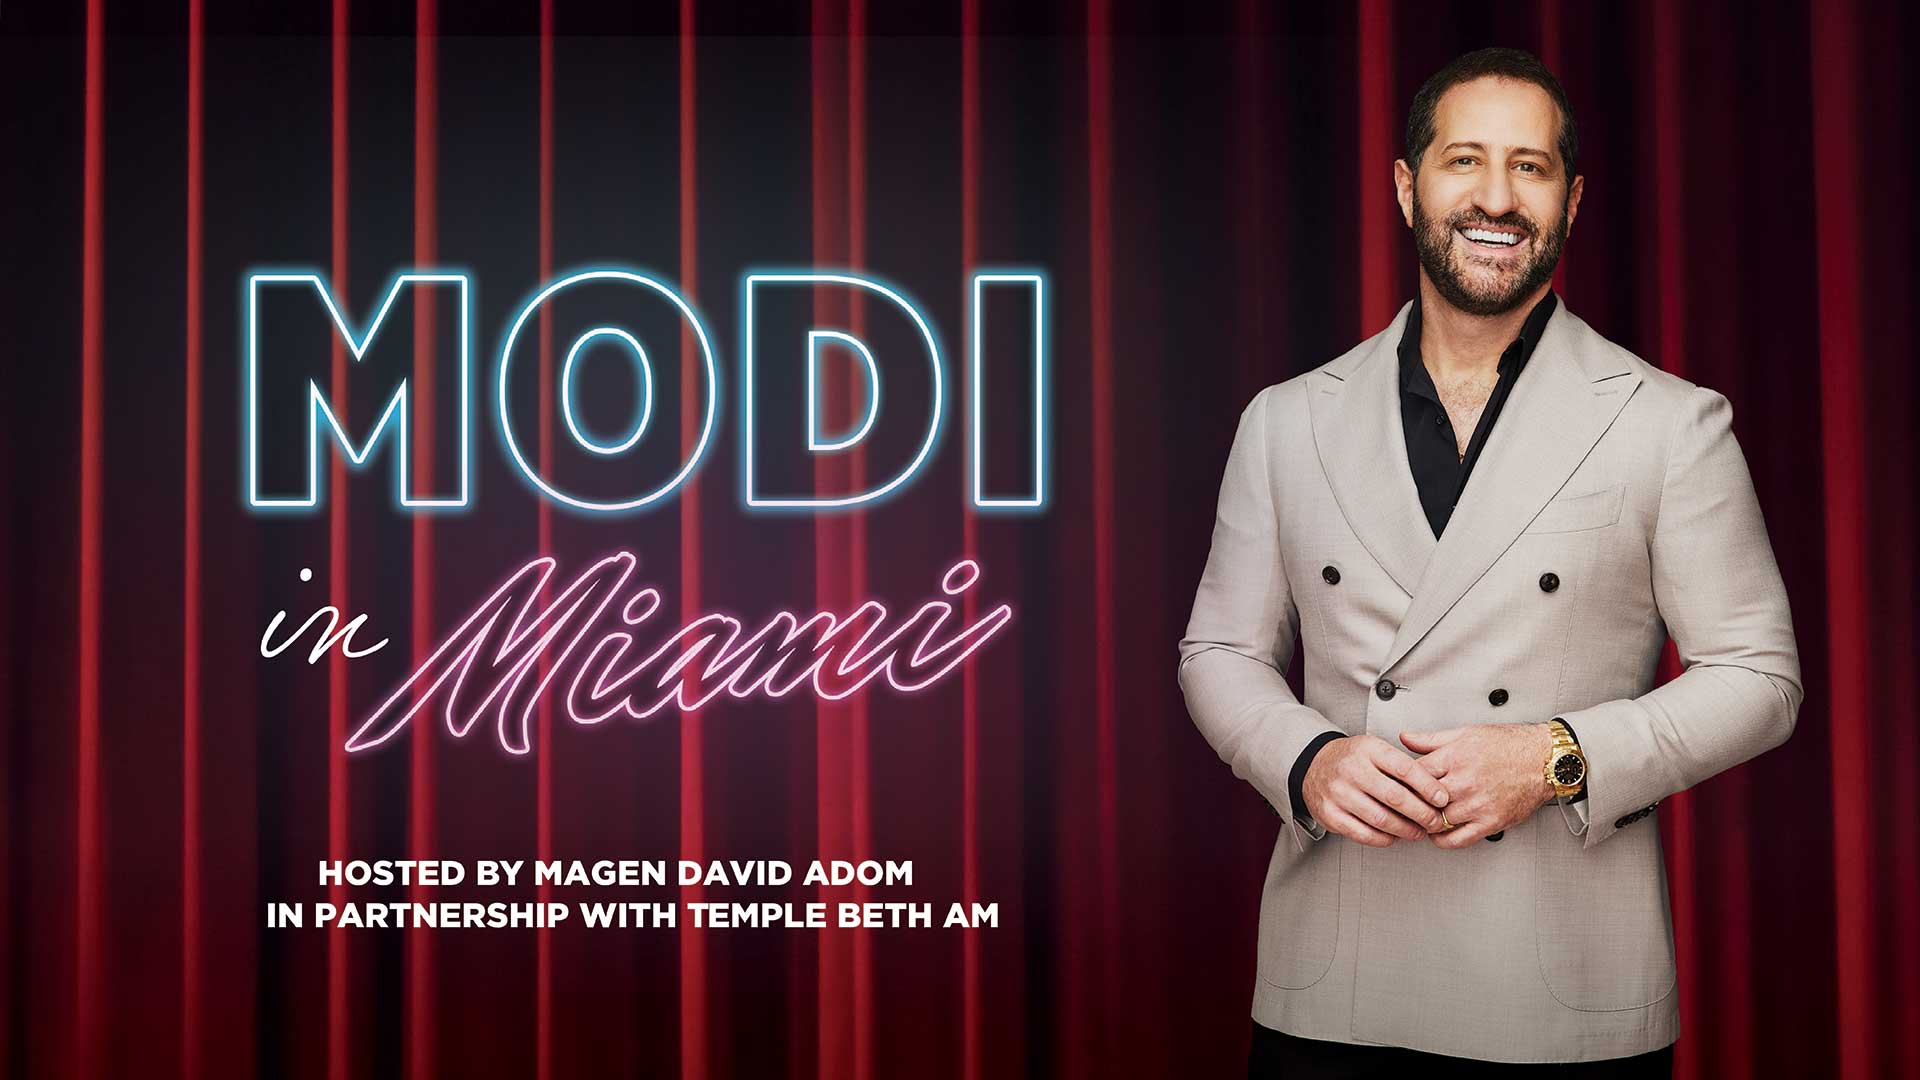 photo of Modi in front of theater curtain - Modi in Miami, Hosted by Magen David Adom